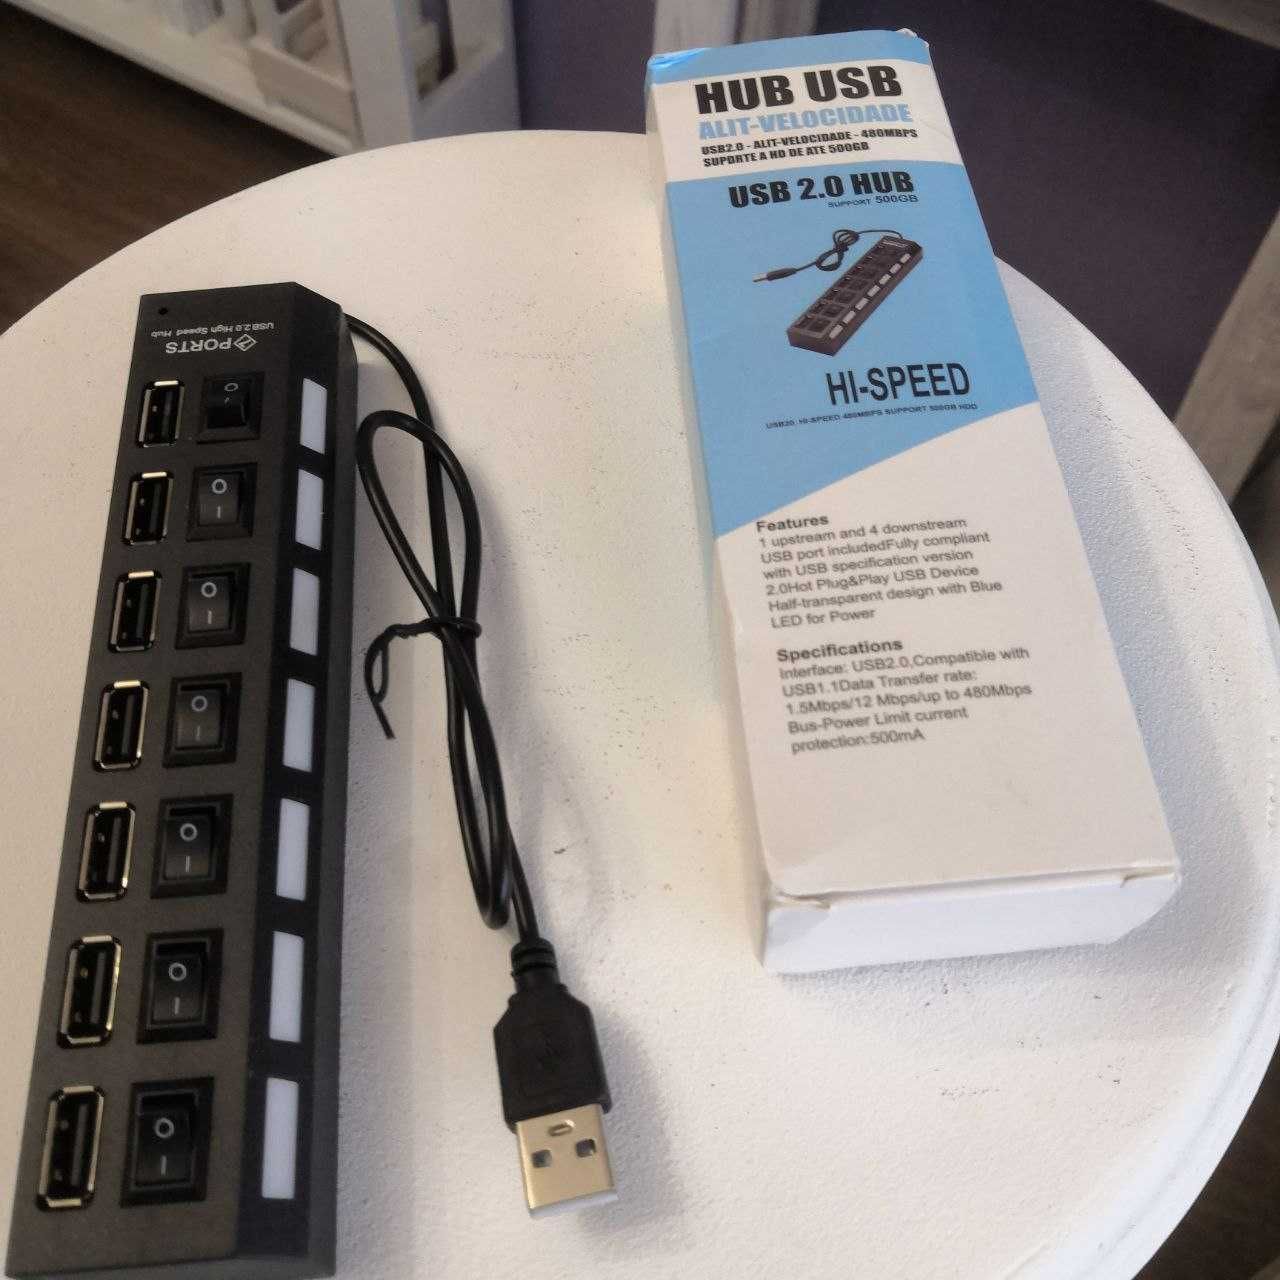 USB Hub 2.0 на 7 портов с выключателями . USB-концентратор